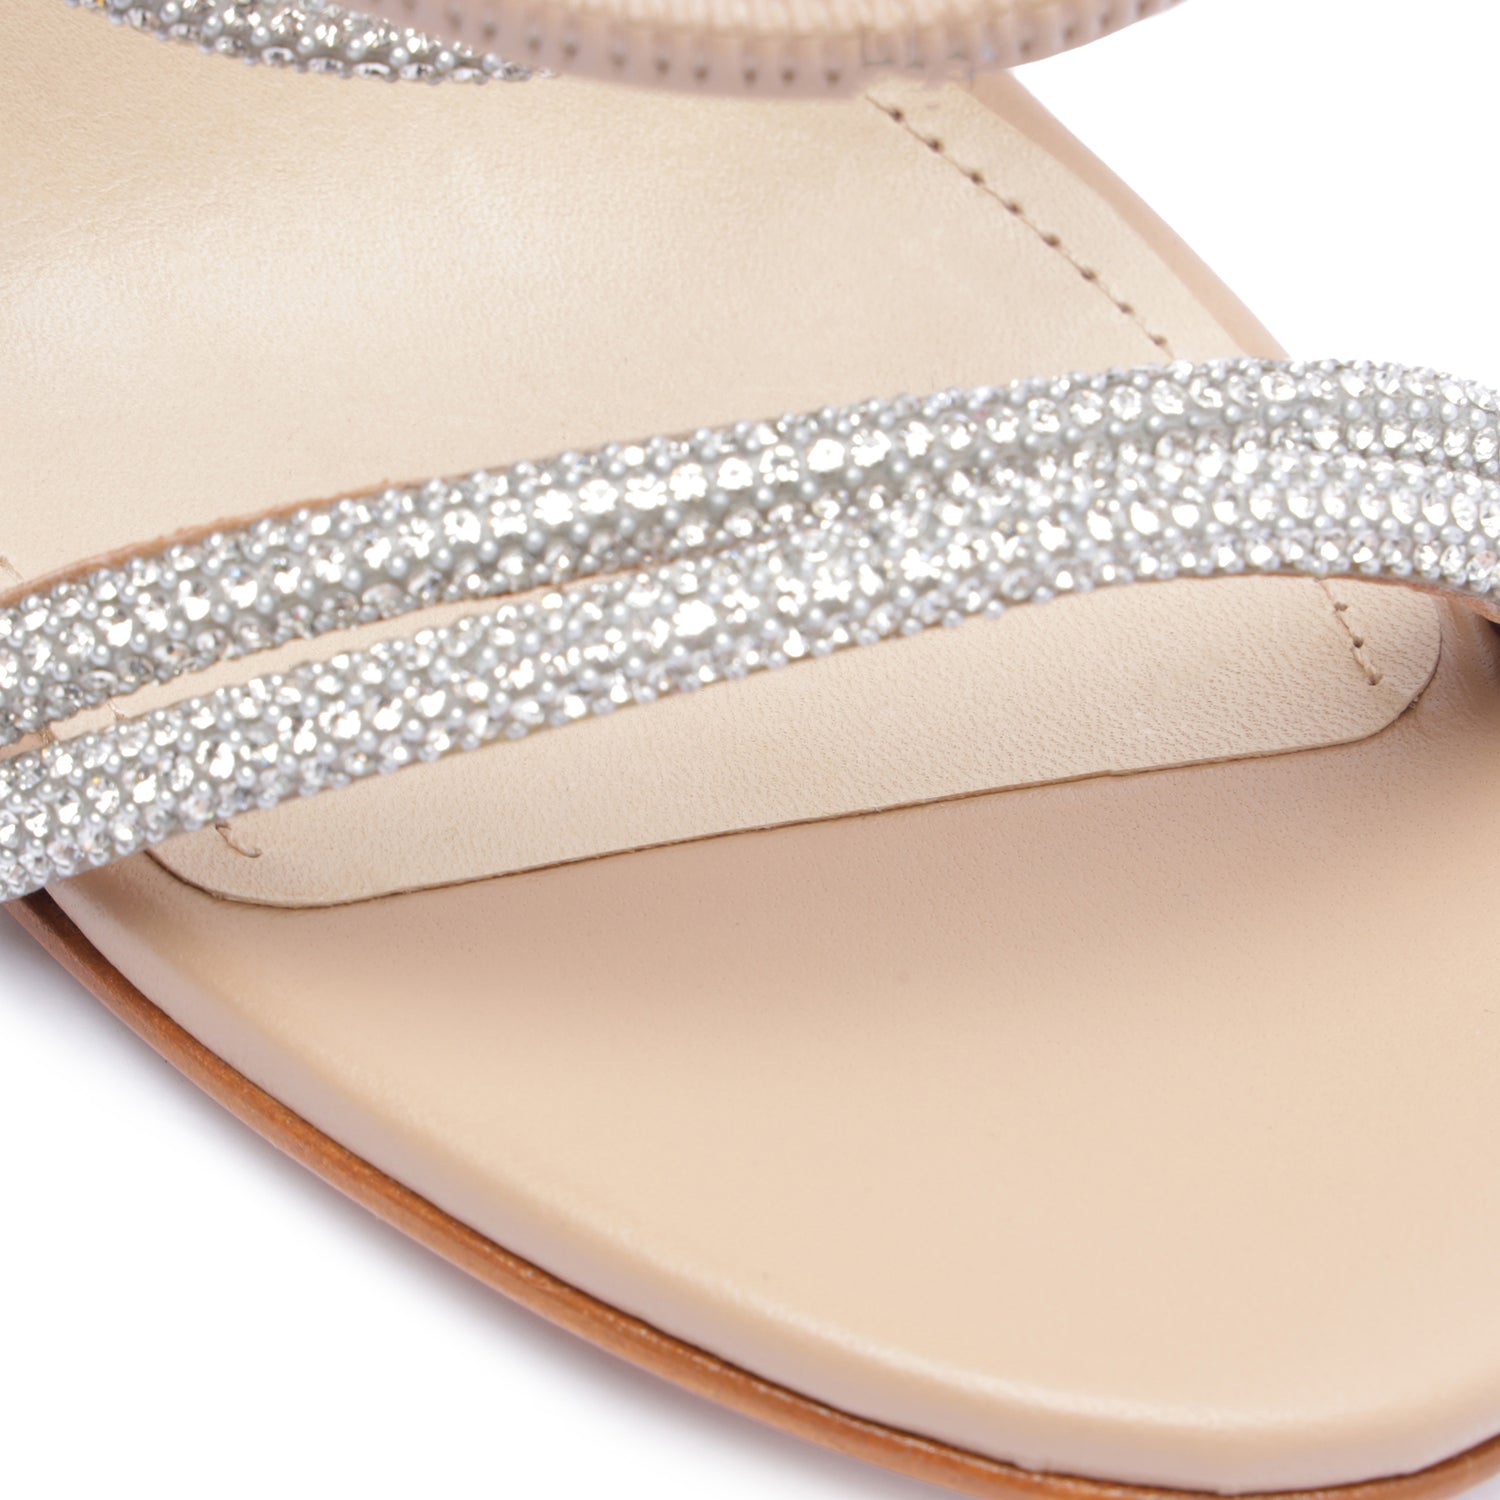 Whiteley Nappa Leather Sandal Neutral Nappa Leather